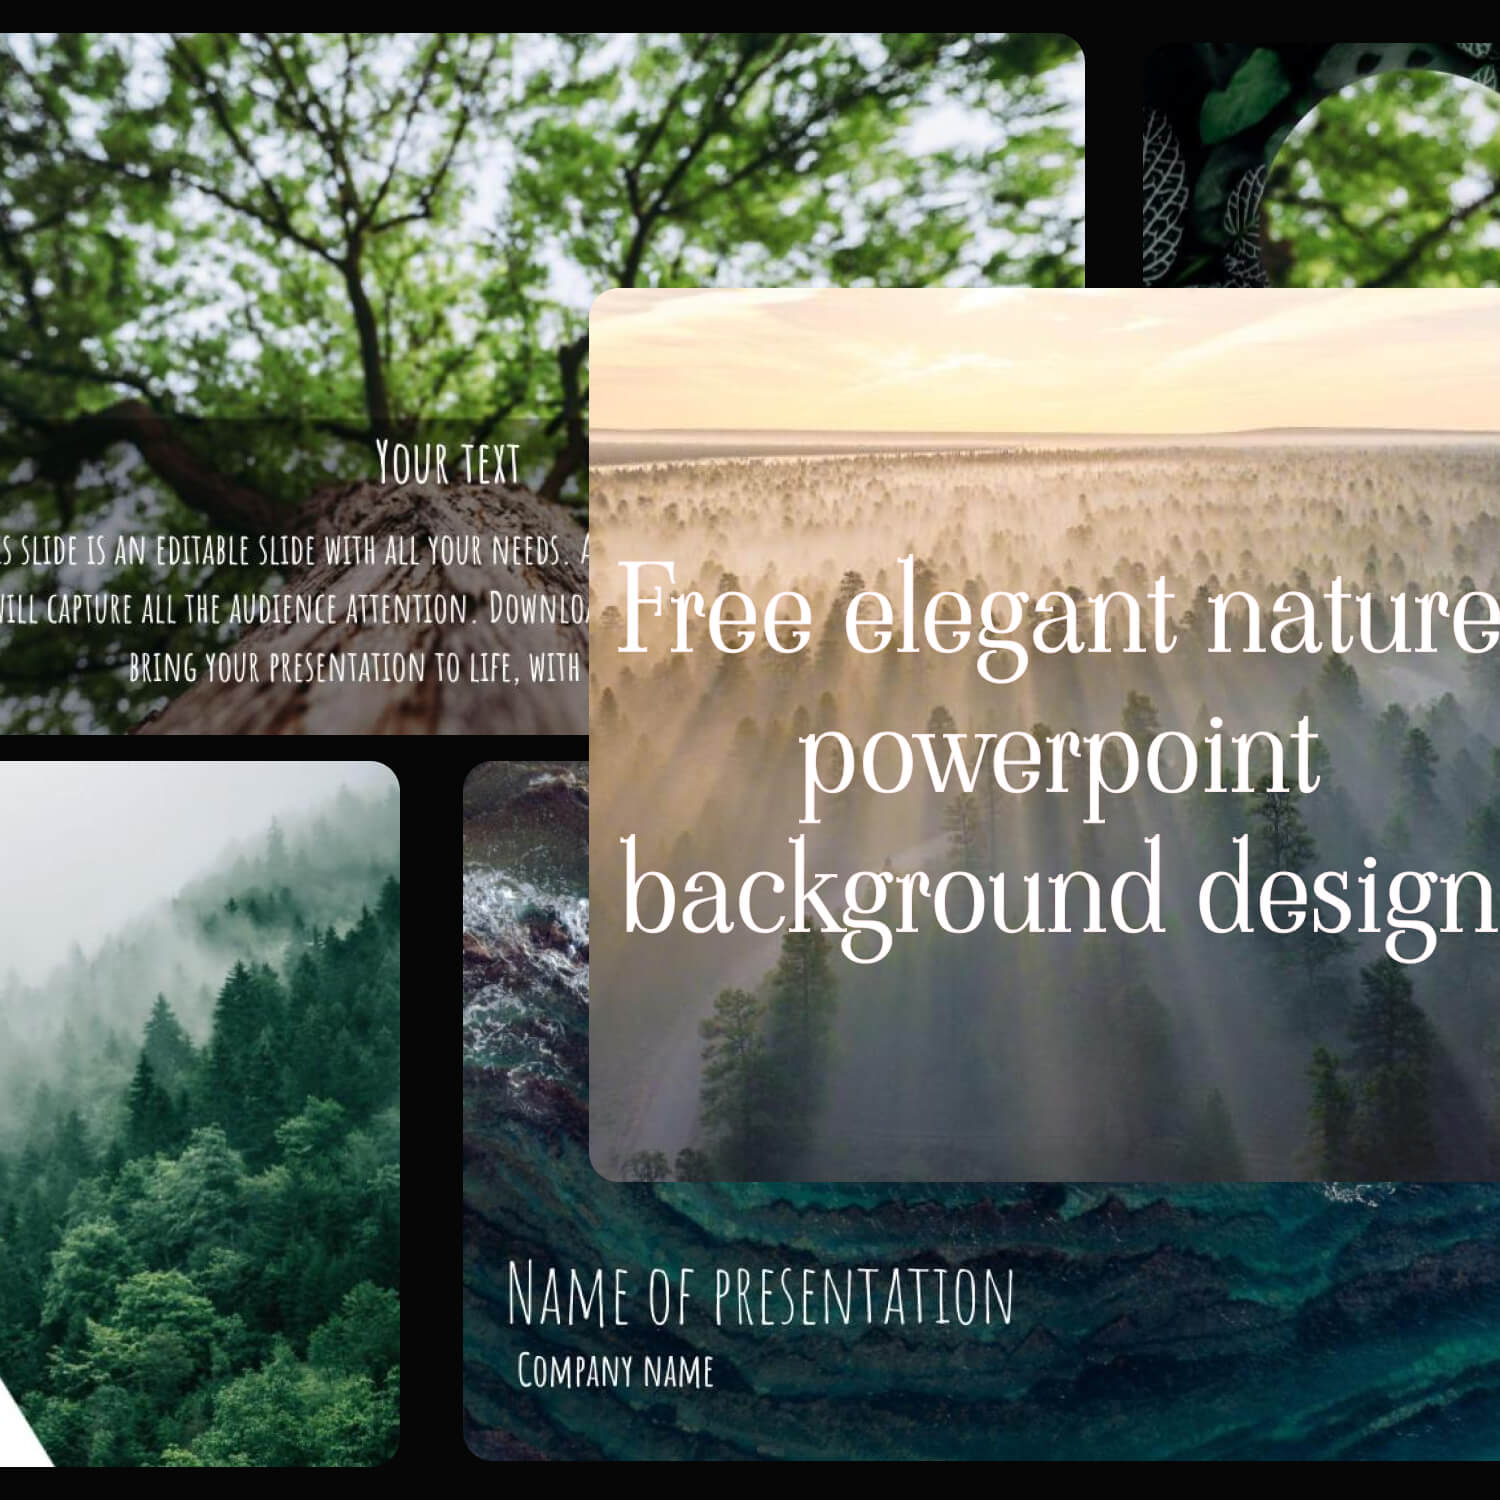 Free Elegant Nature Powerpoint Background Design.